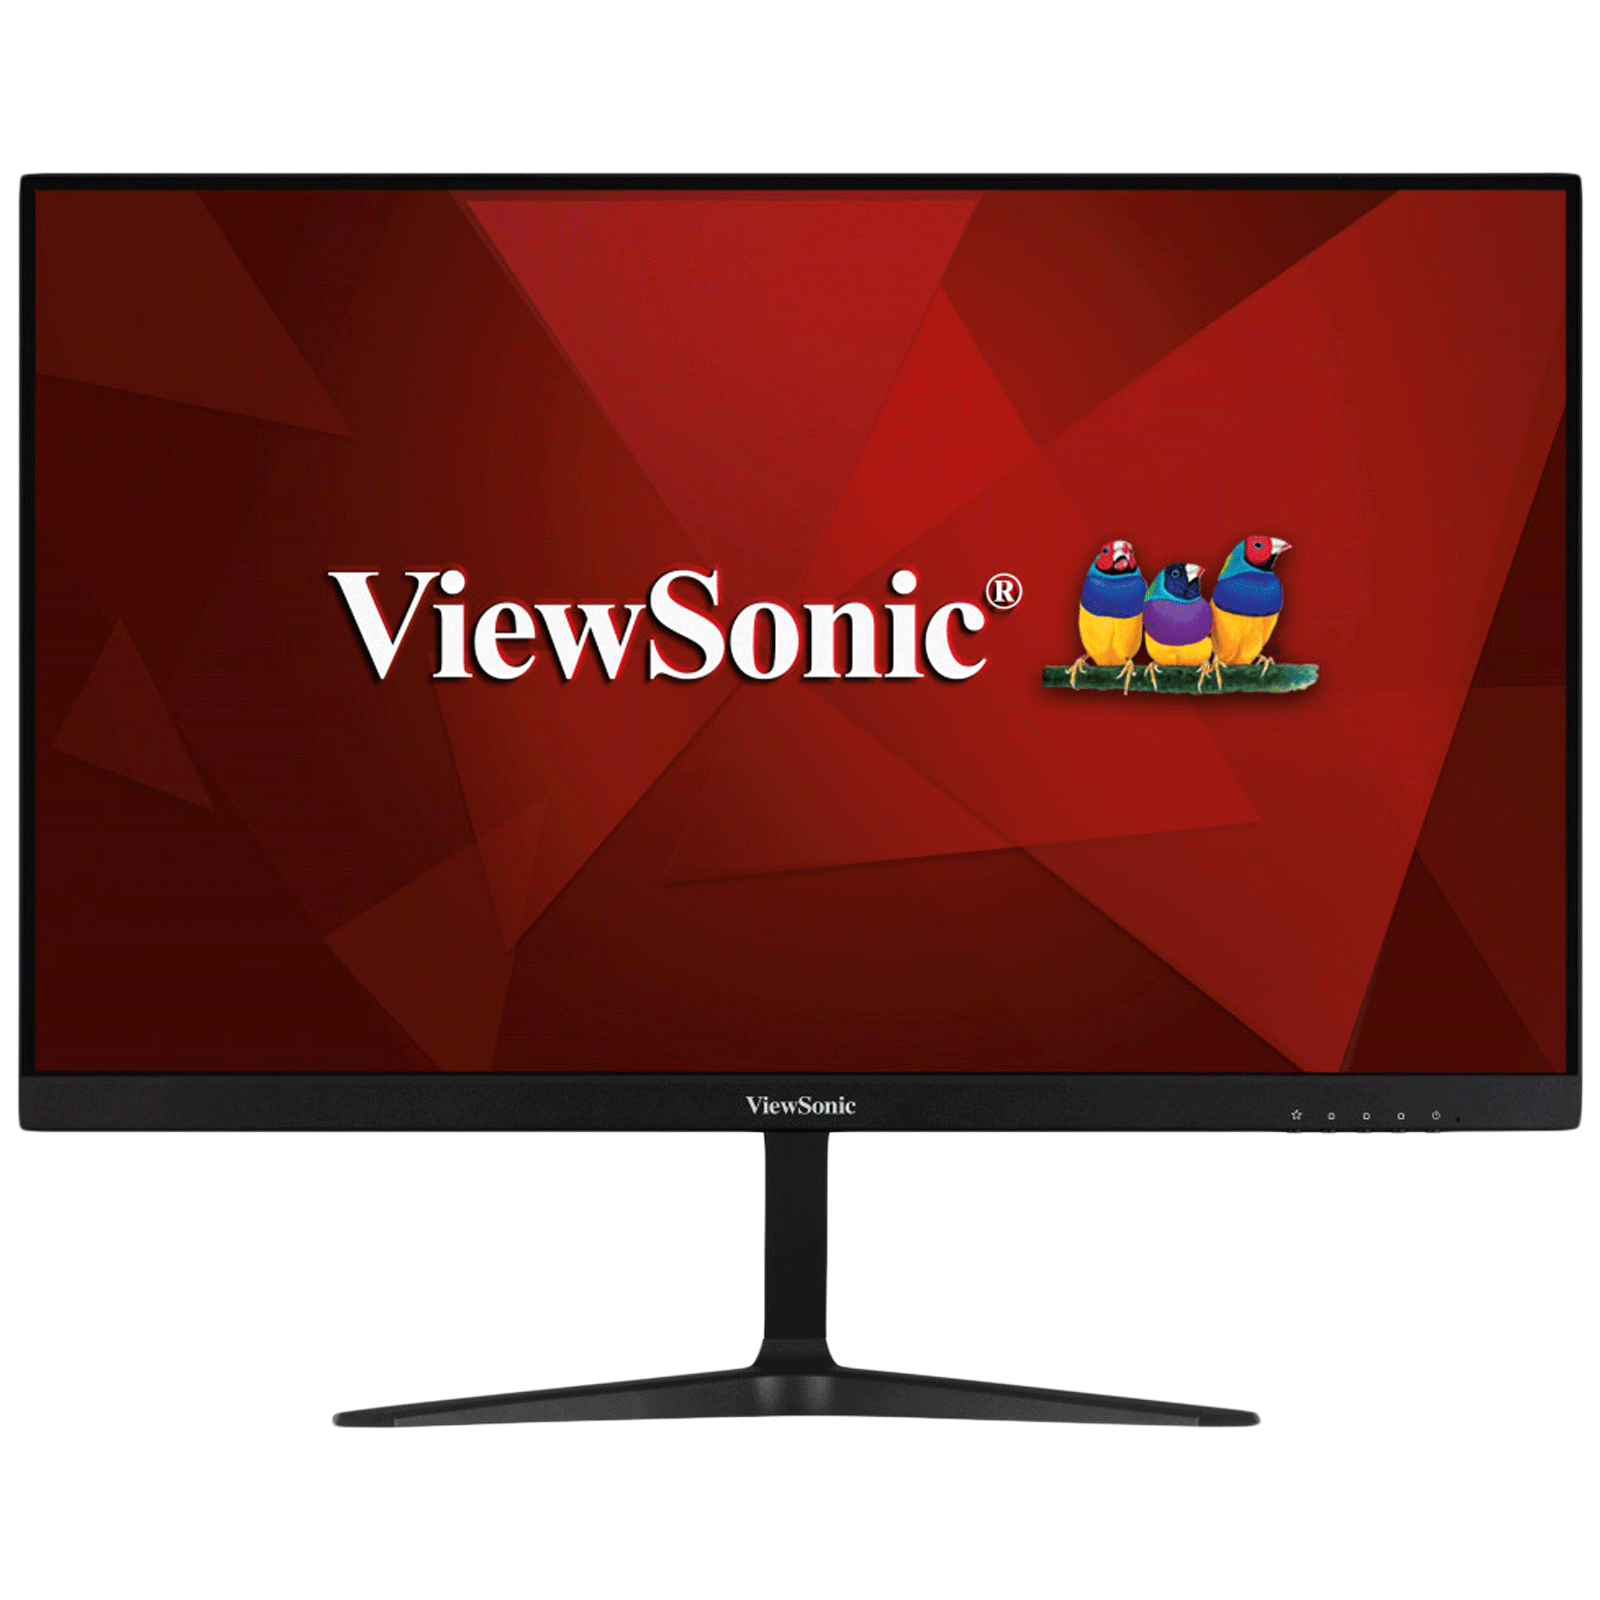 ViewSonic Omni 60.96 cm (24 inch) Full HD VA Panel LED Frameless Gaming Monitor with AMD FreeSync